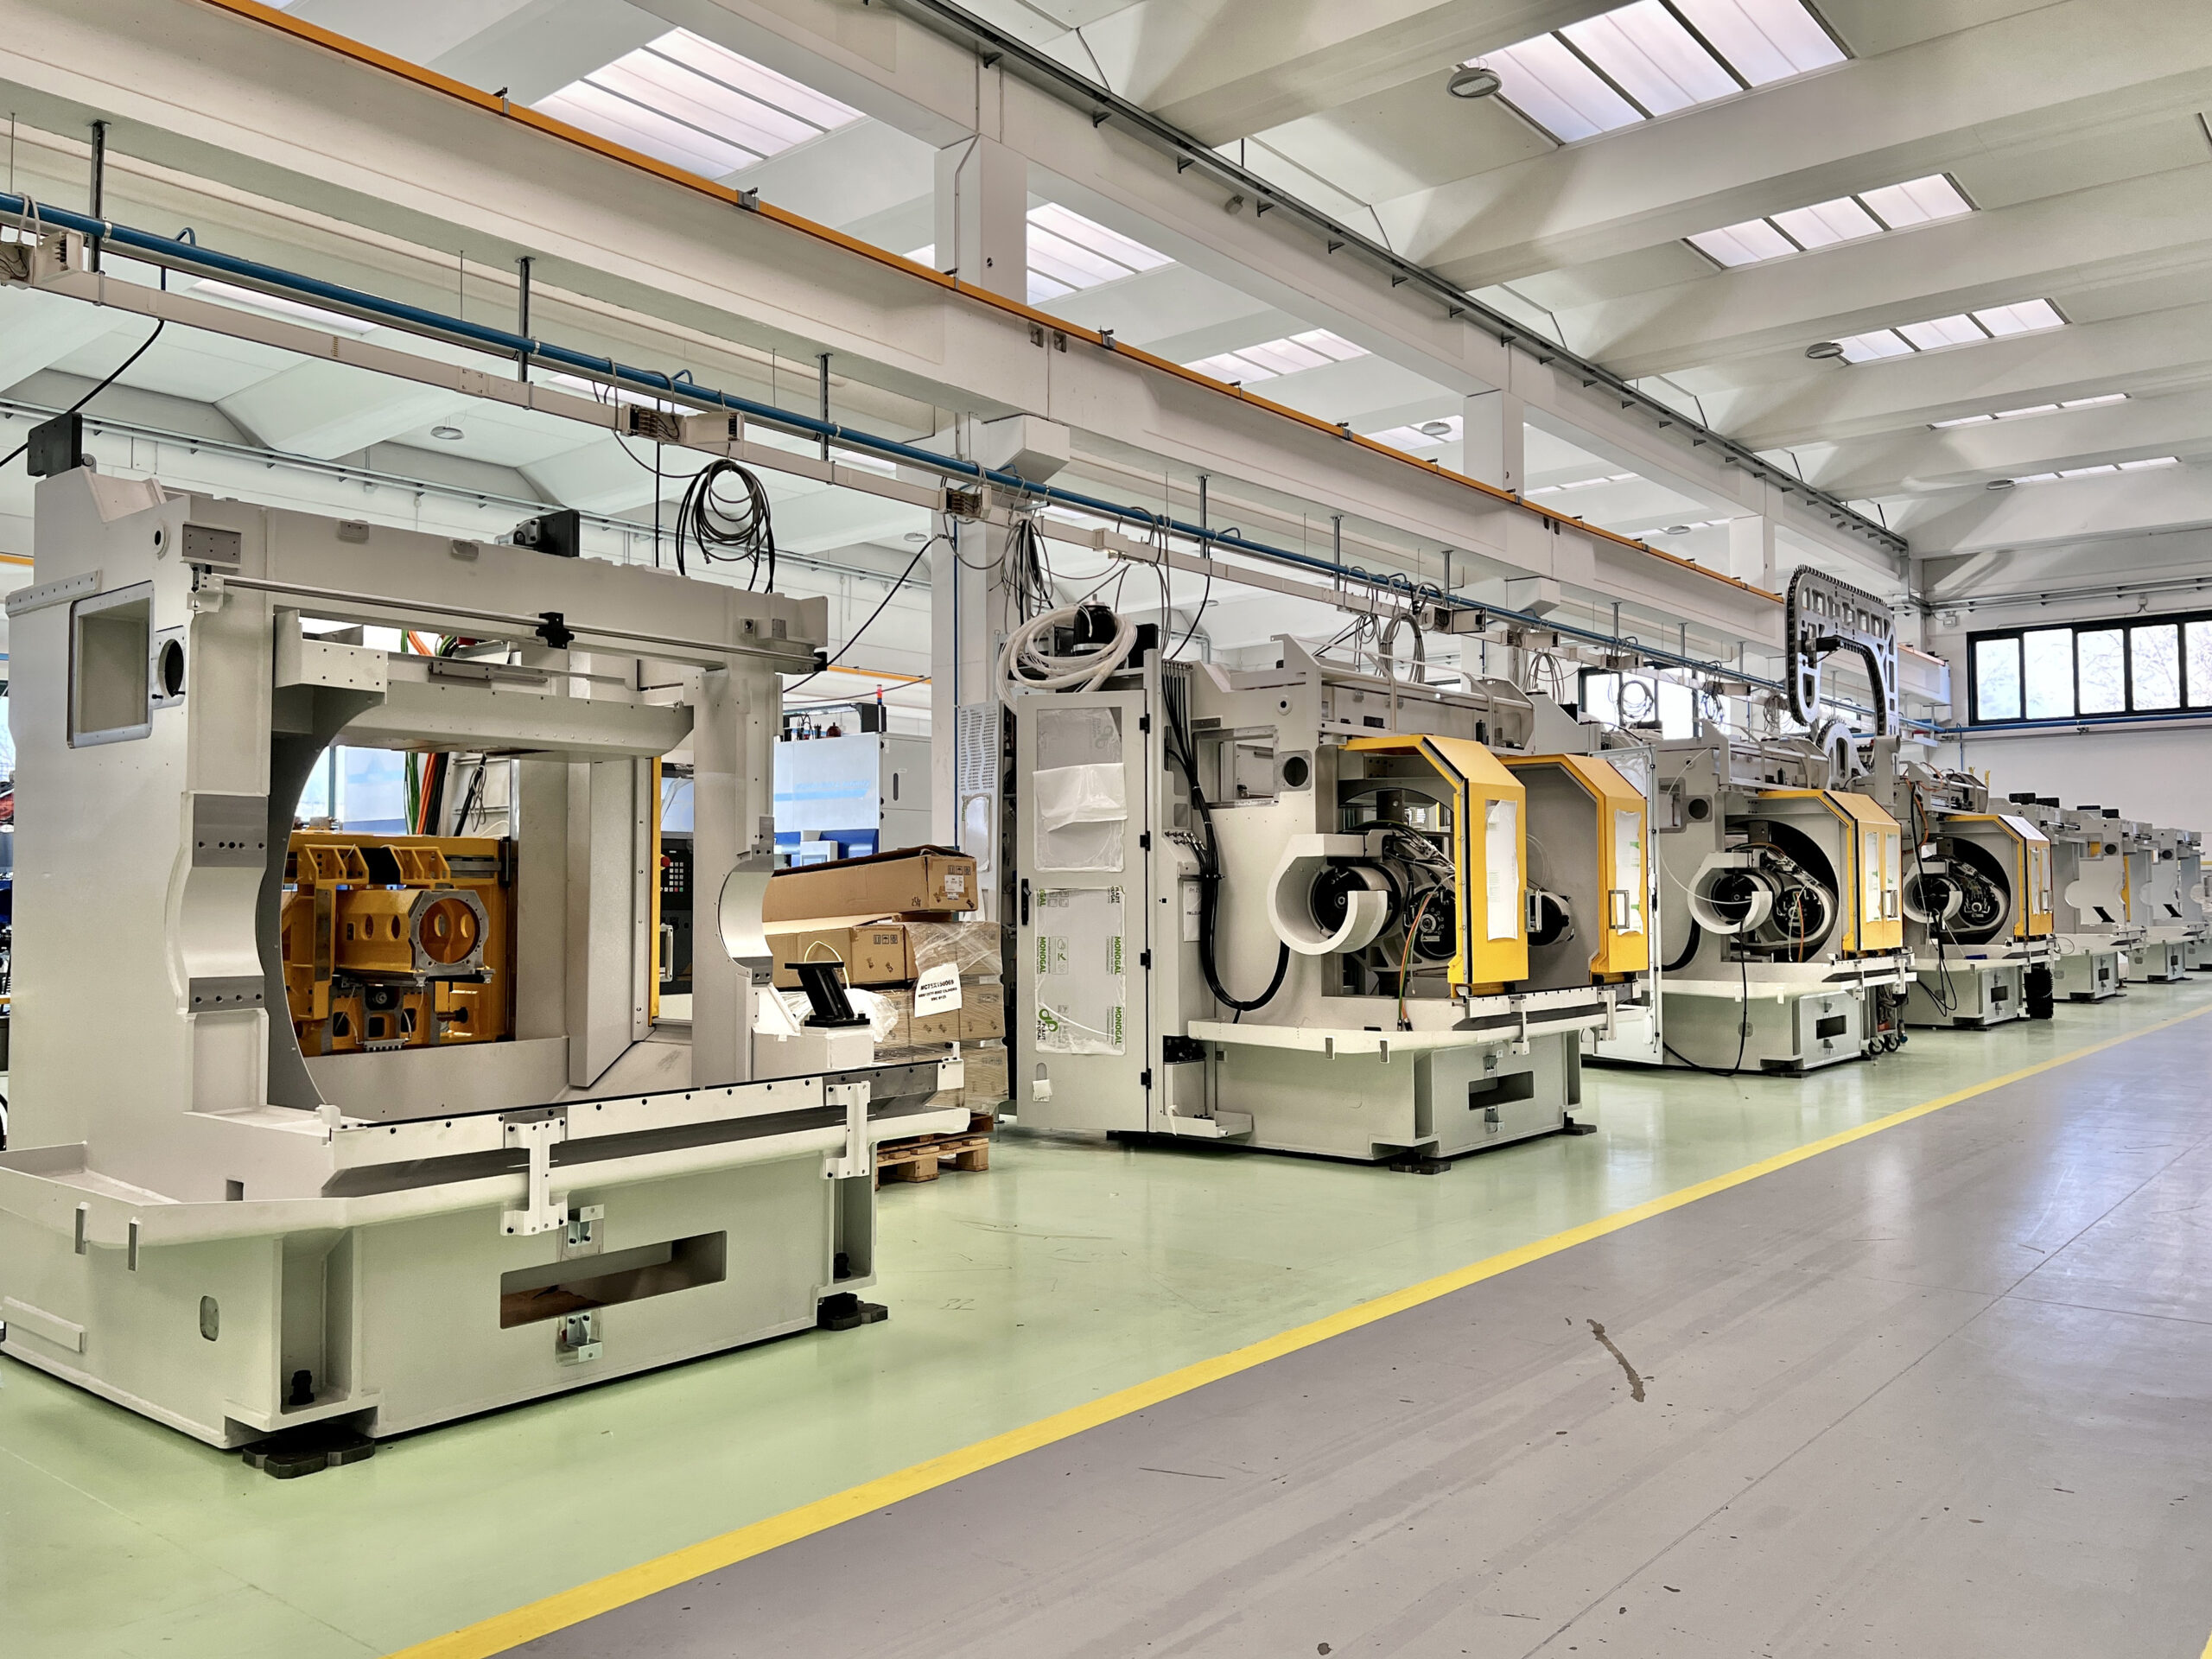 5-axis Horizontal Machining Centers, CNC Milling Machines